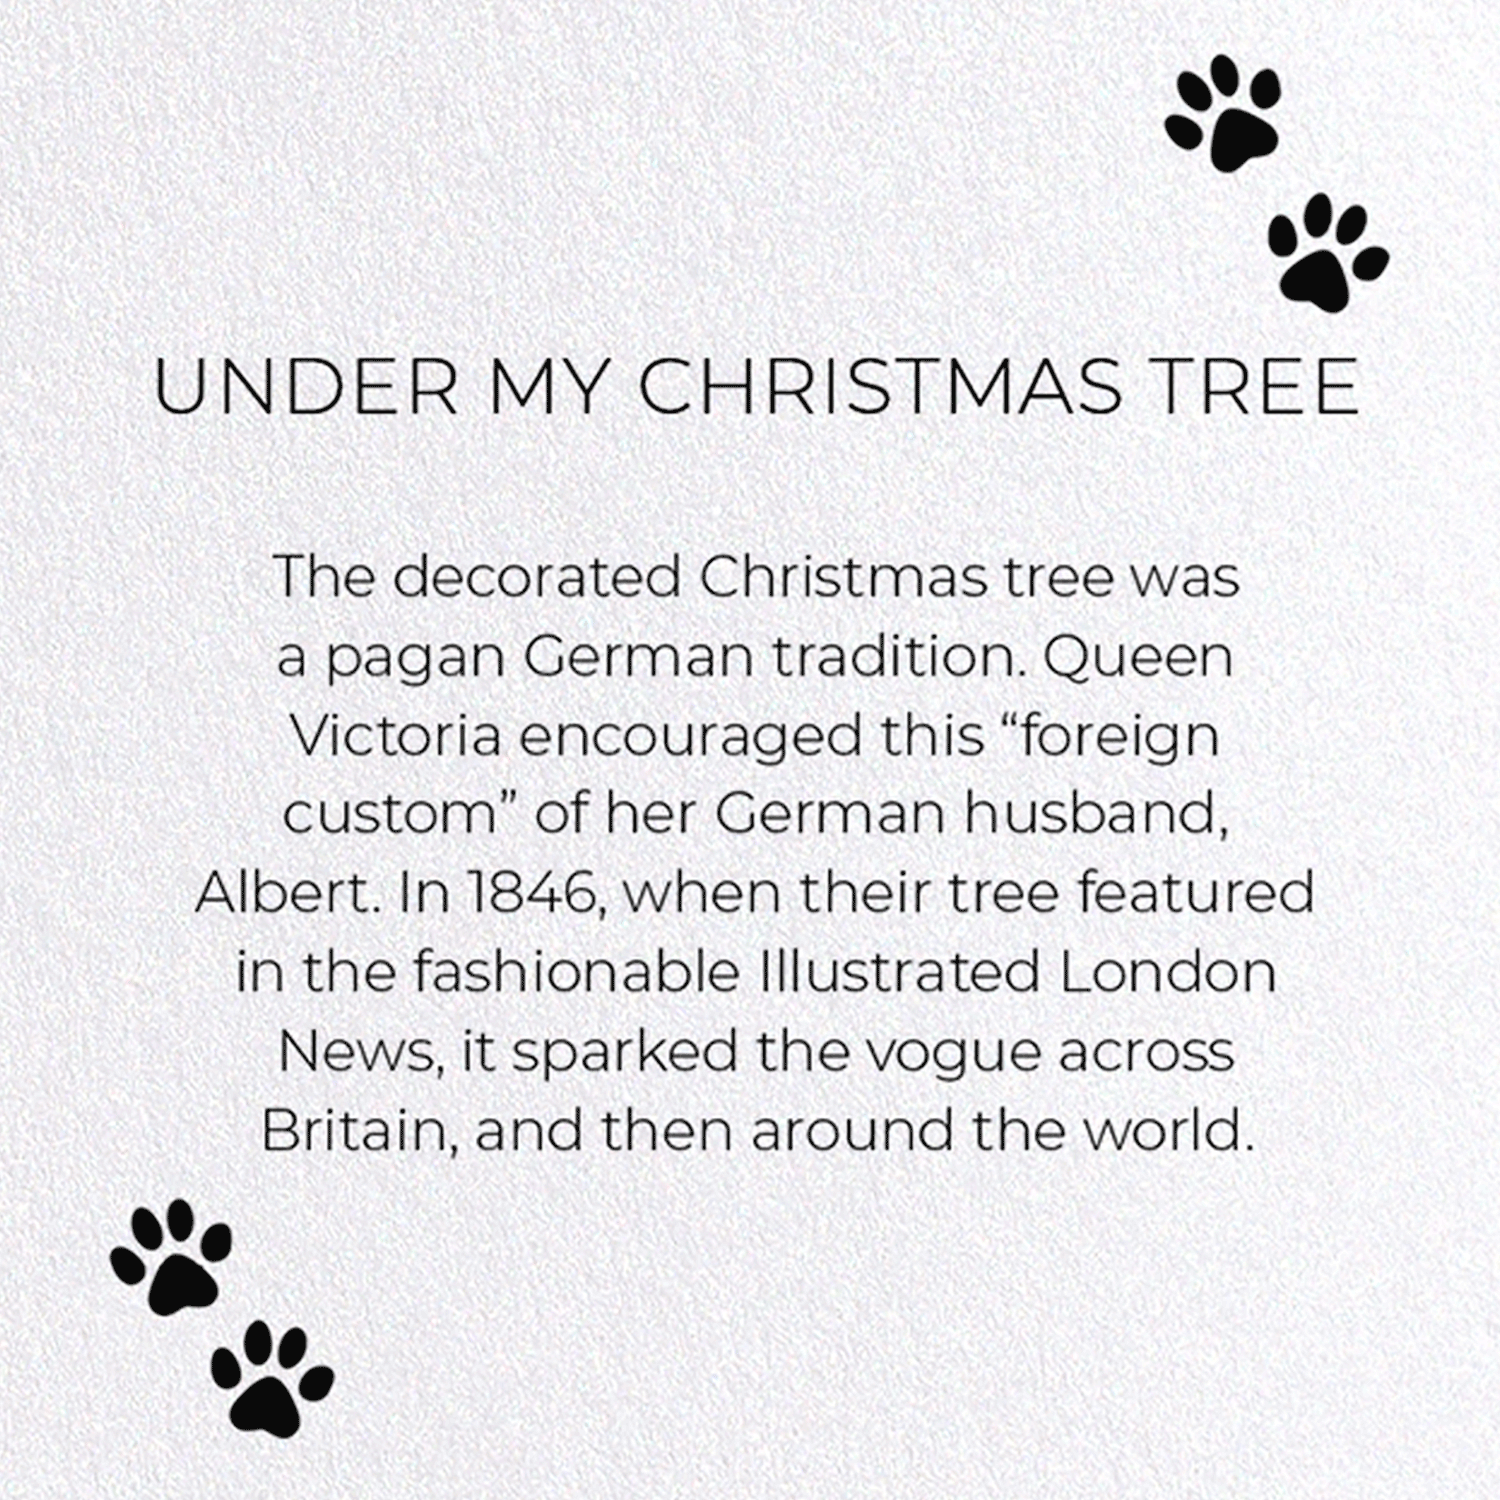 UNDER MY CHRISTMAS TREE